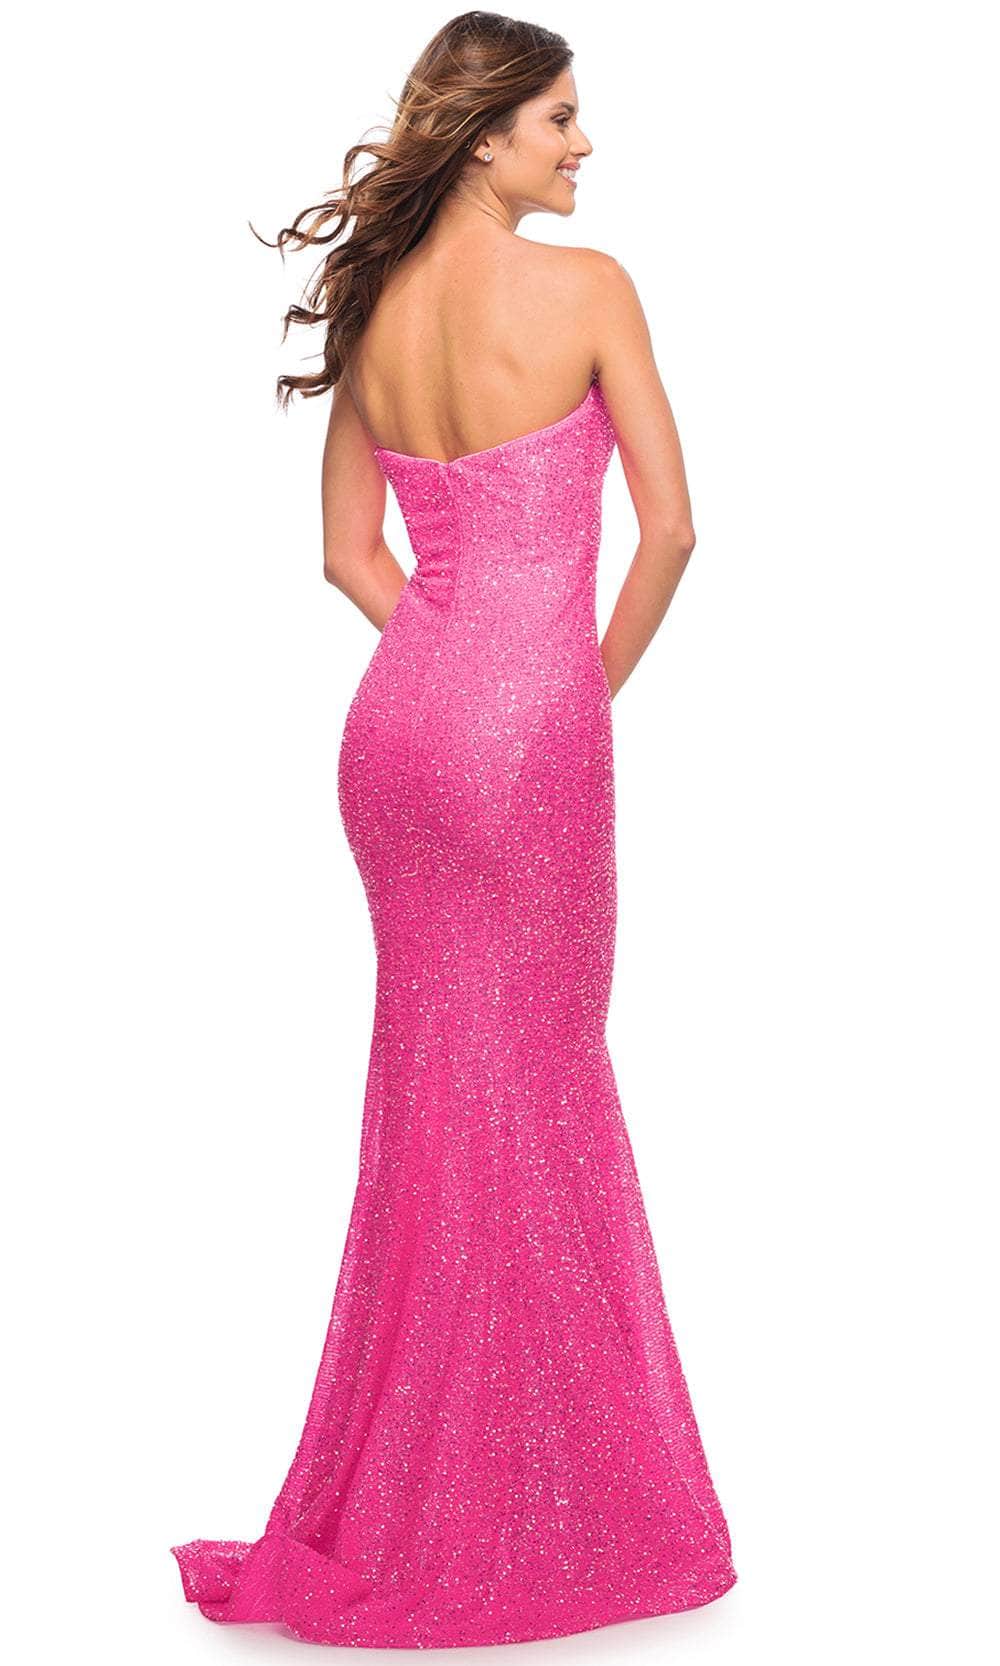 La Femme 30698 - Strapless Sweetheart Mermaid Dress Special Occasion Dress